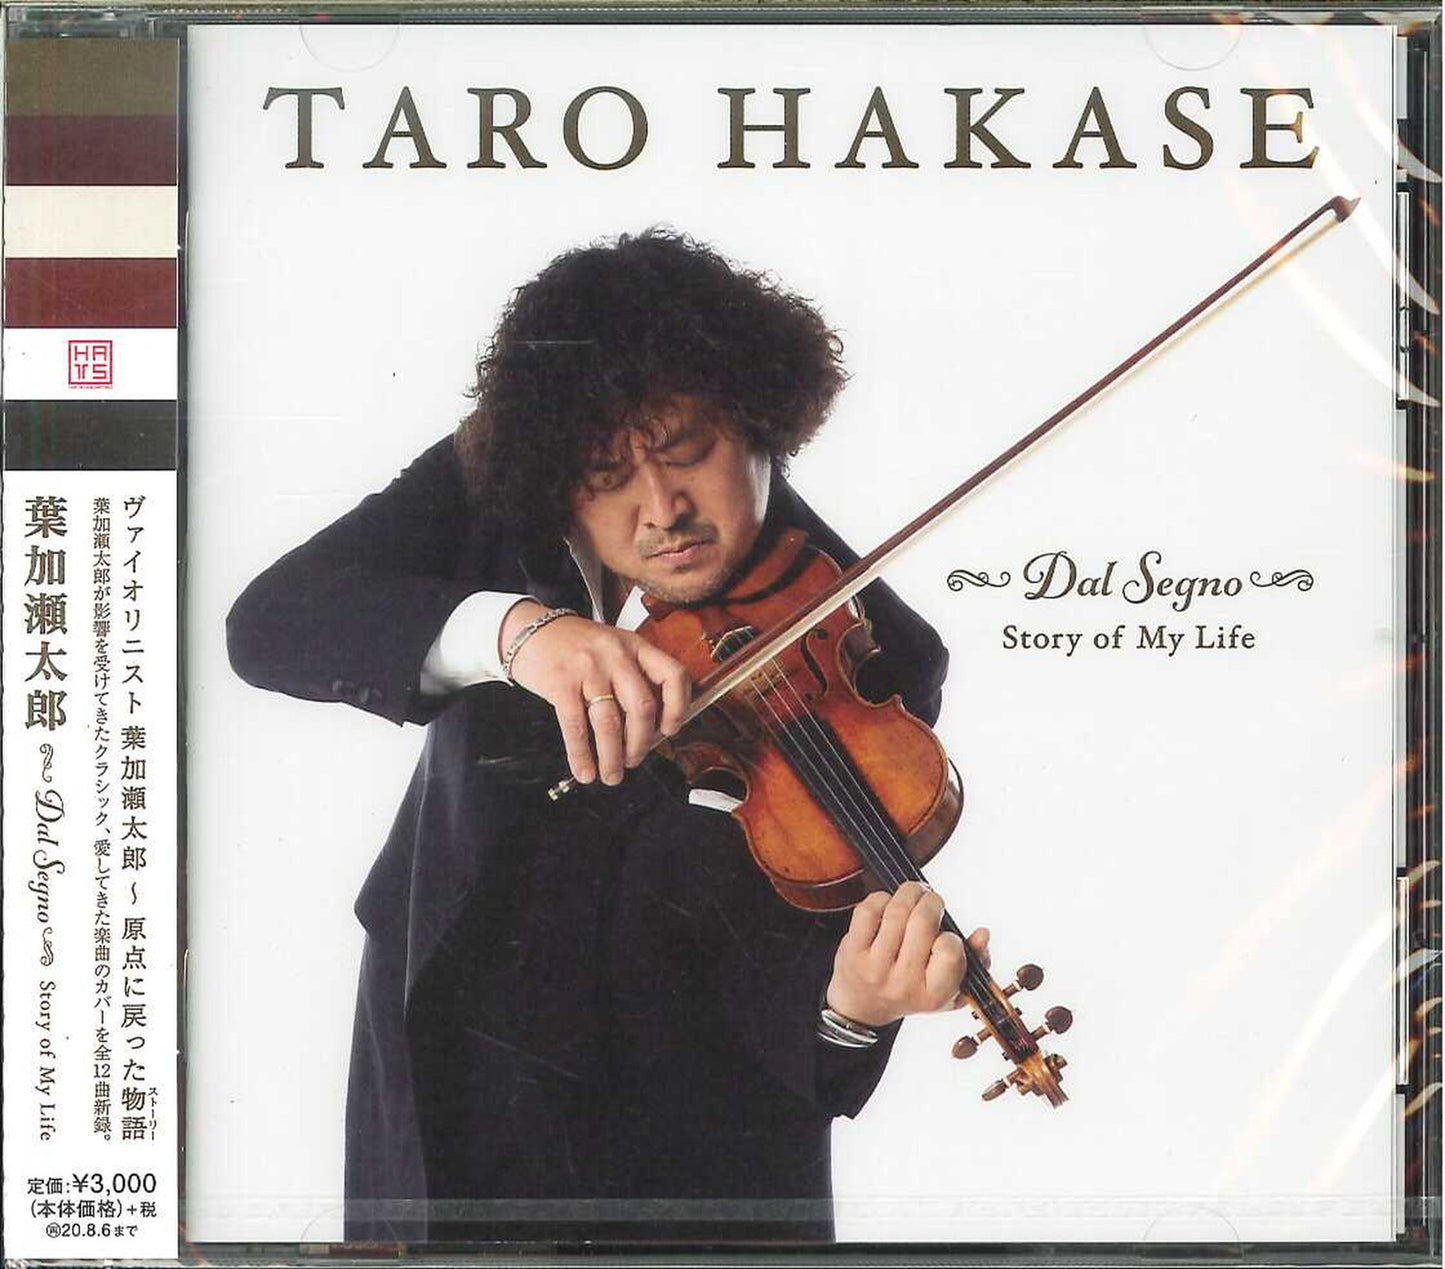 Taro Hakase - Dal Segno-Story Of My Life - Japan  CD